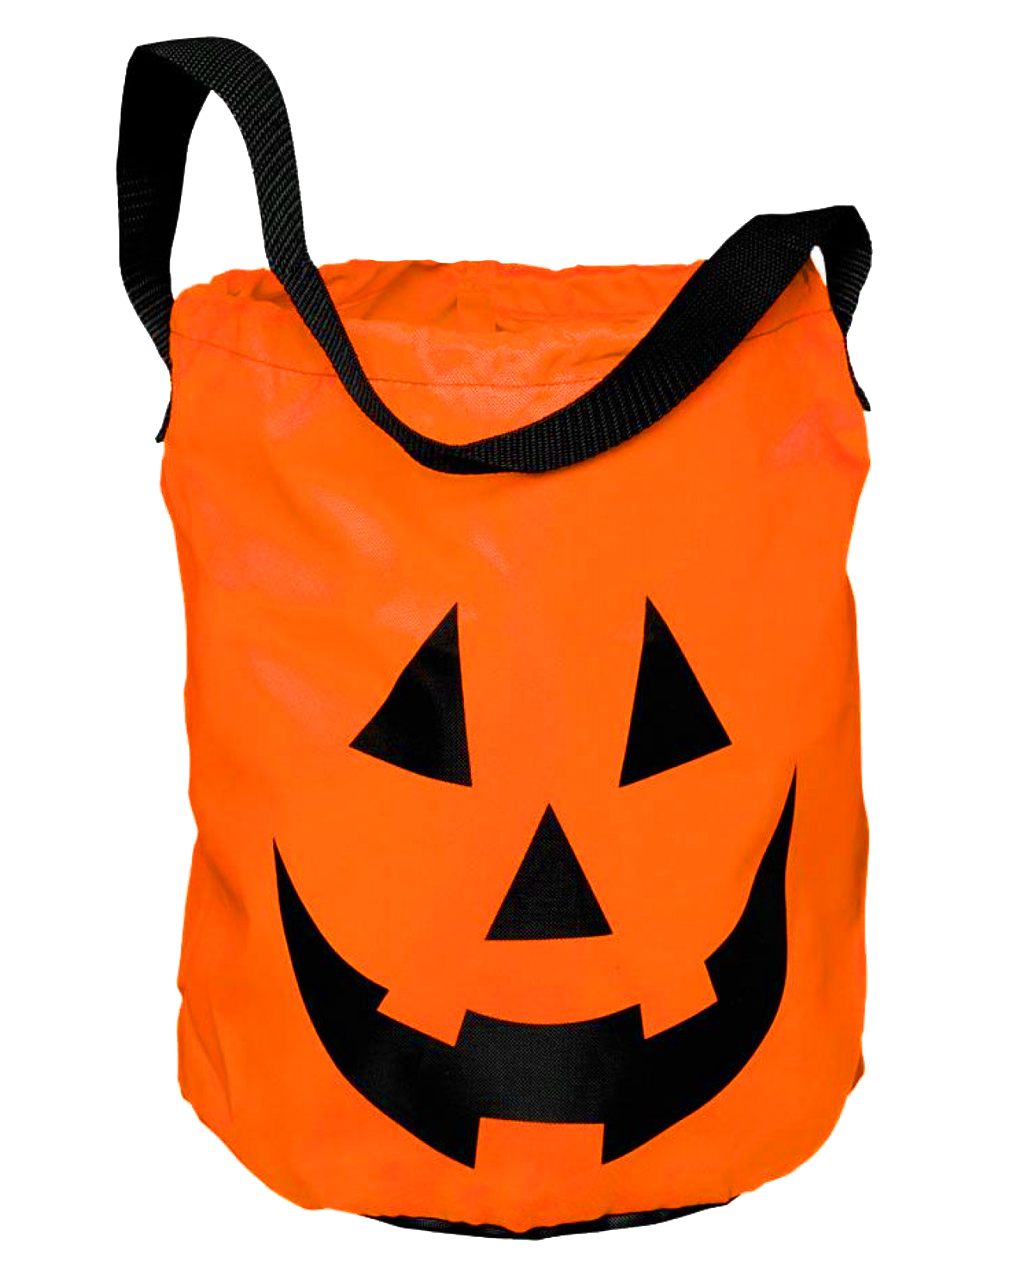 Halloween tote bag Halloween Carved pumpkin Trick or treat candy bag |\u00a0Pumpkin candy bag Halloween candy bag Trick or treat tote